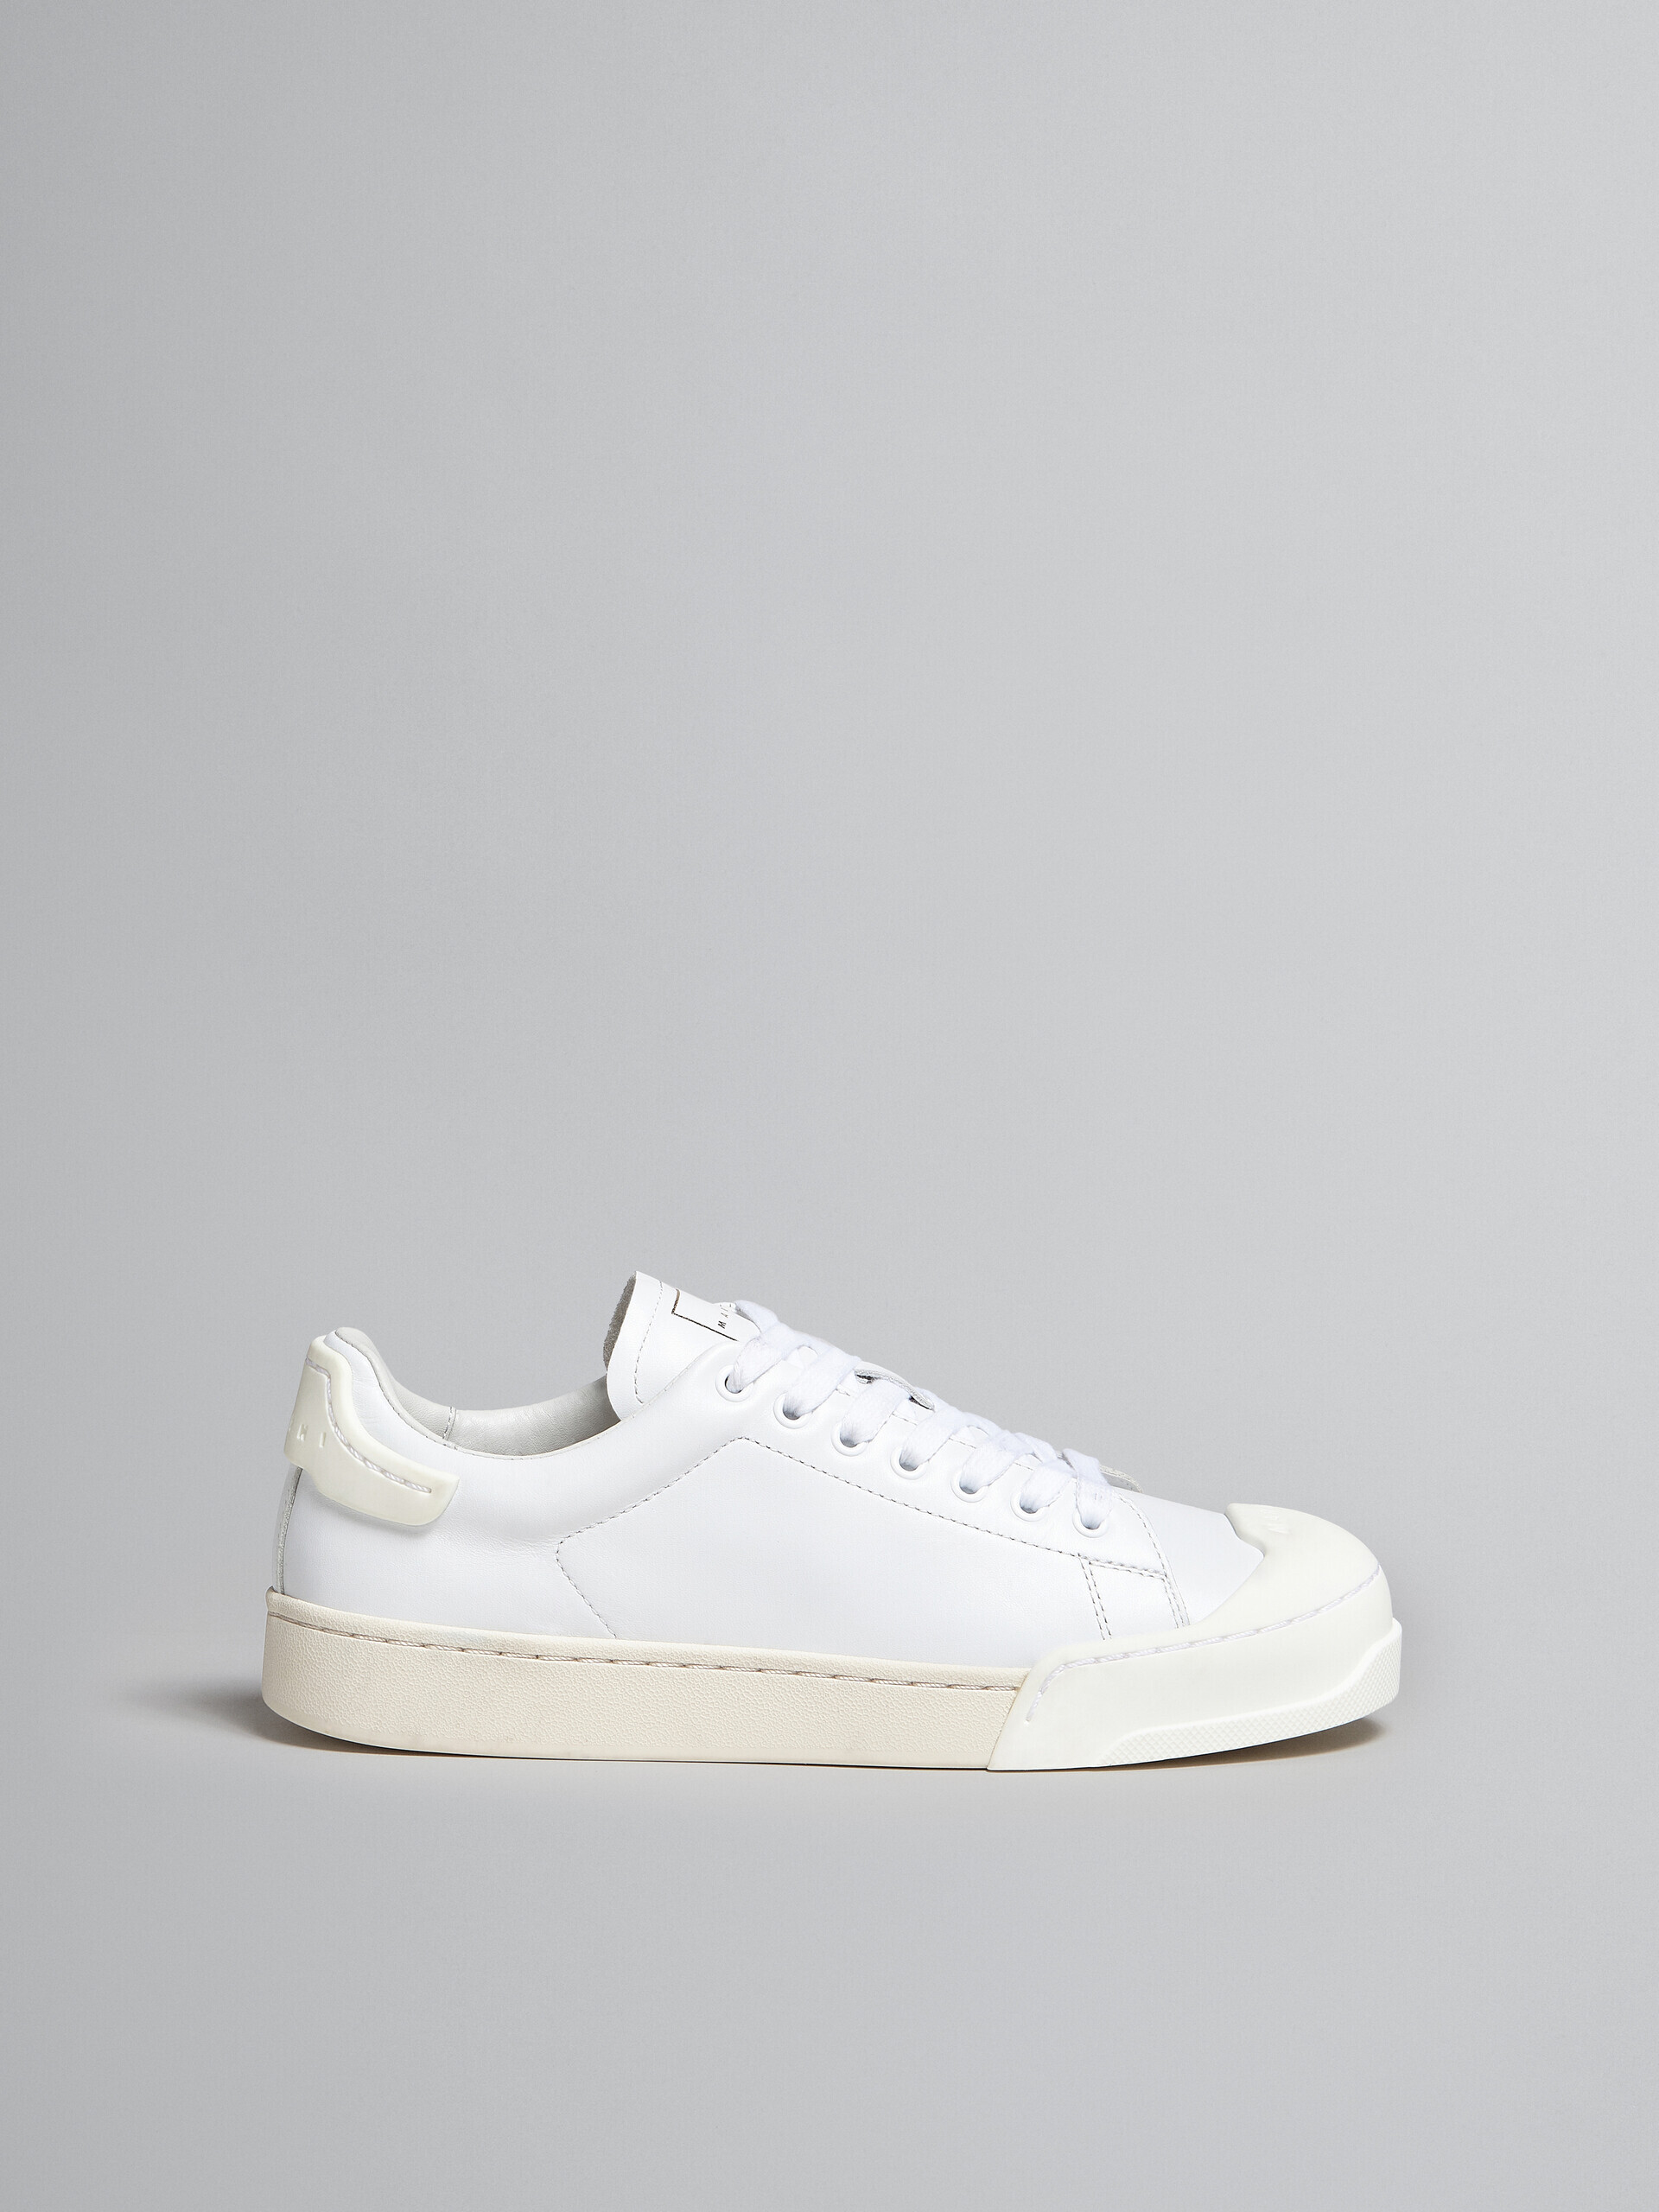 Dada Bumper sneaker in white leather - Sneakers - Image 1